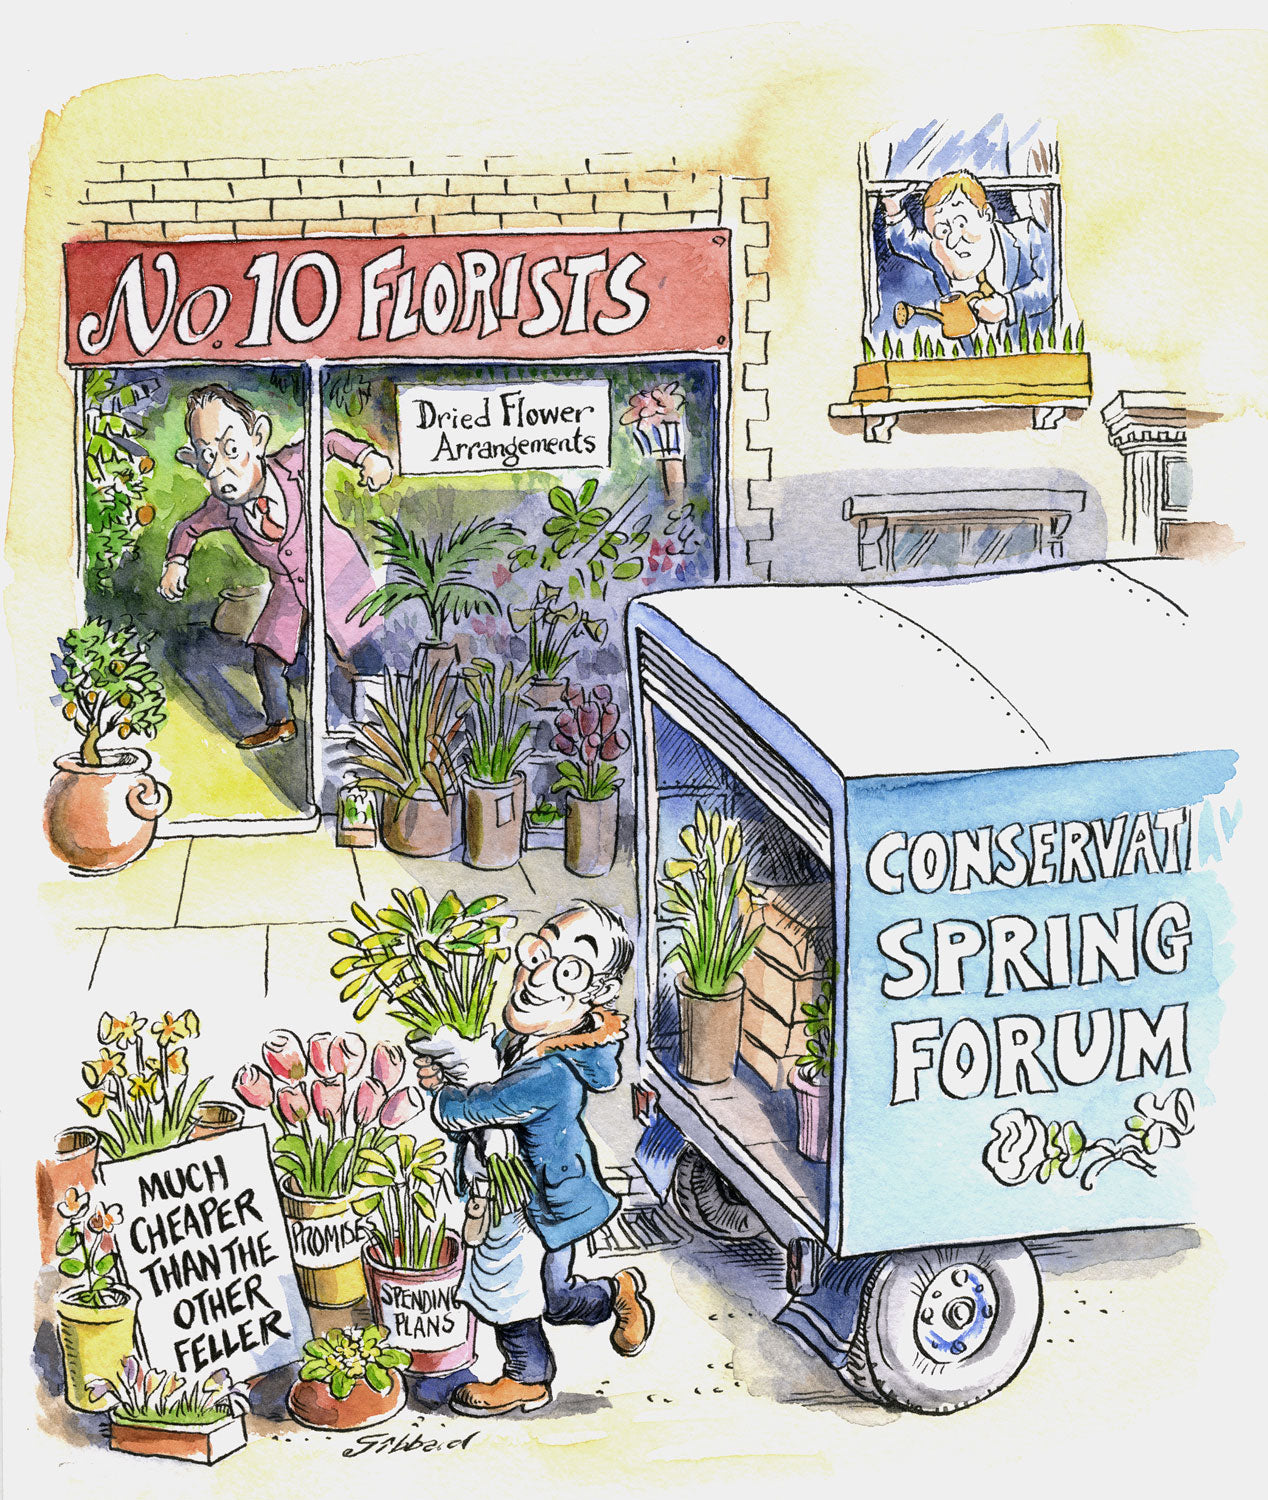 Conservative Spring Forum